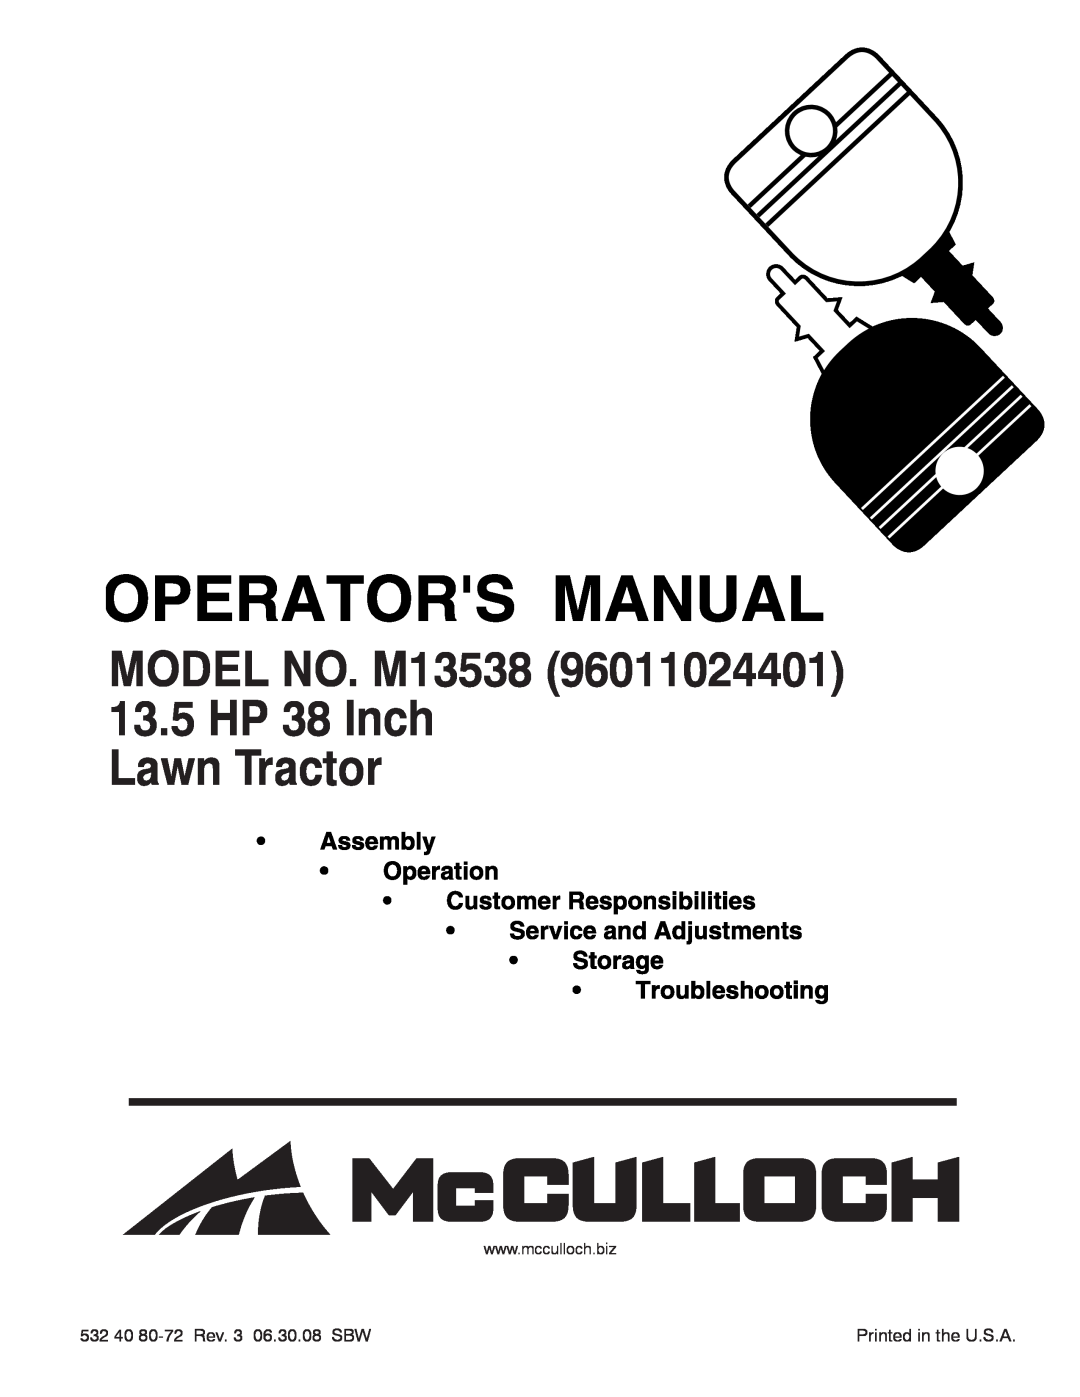 McCulloch manual MODEL NO. M13538 13.5 HP 38 Inch Lawn Tractor, 532 40 80-72 Rev. 3 06.30.08 SBW 